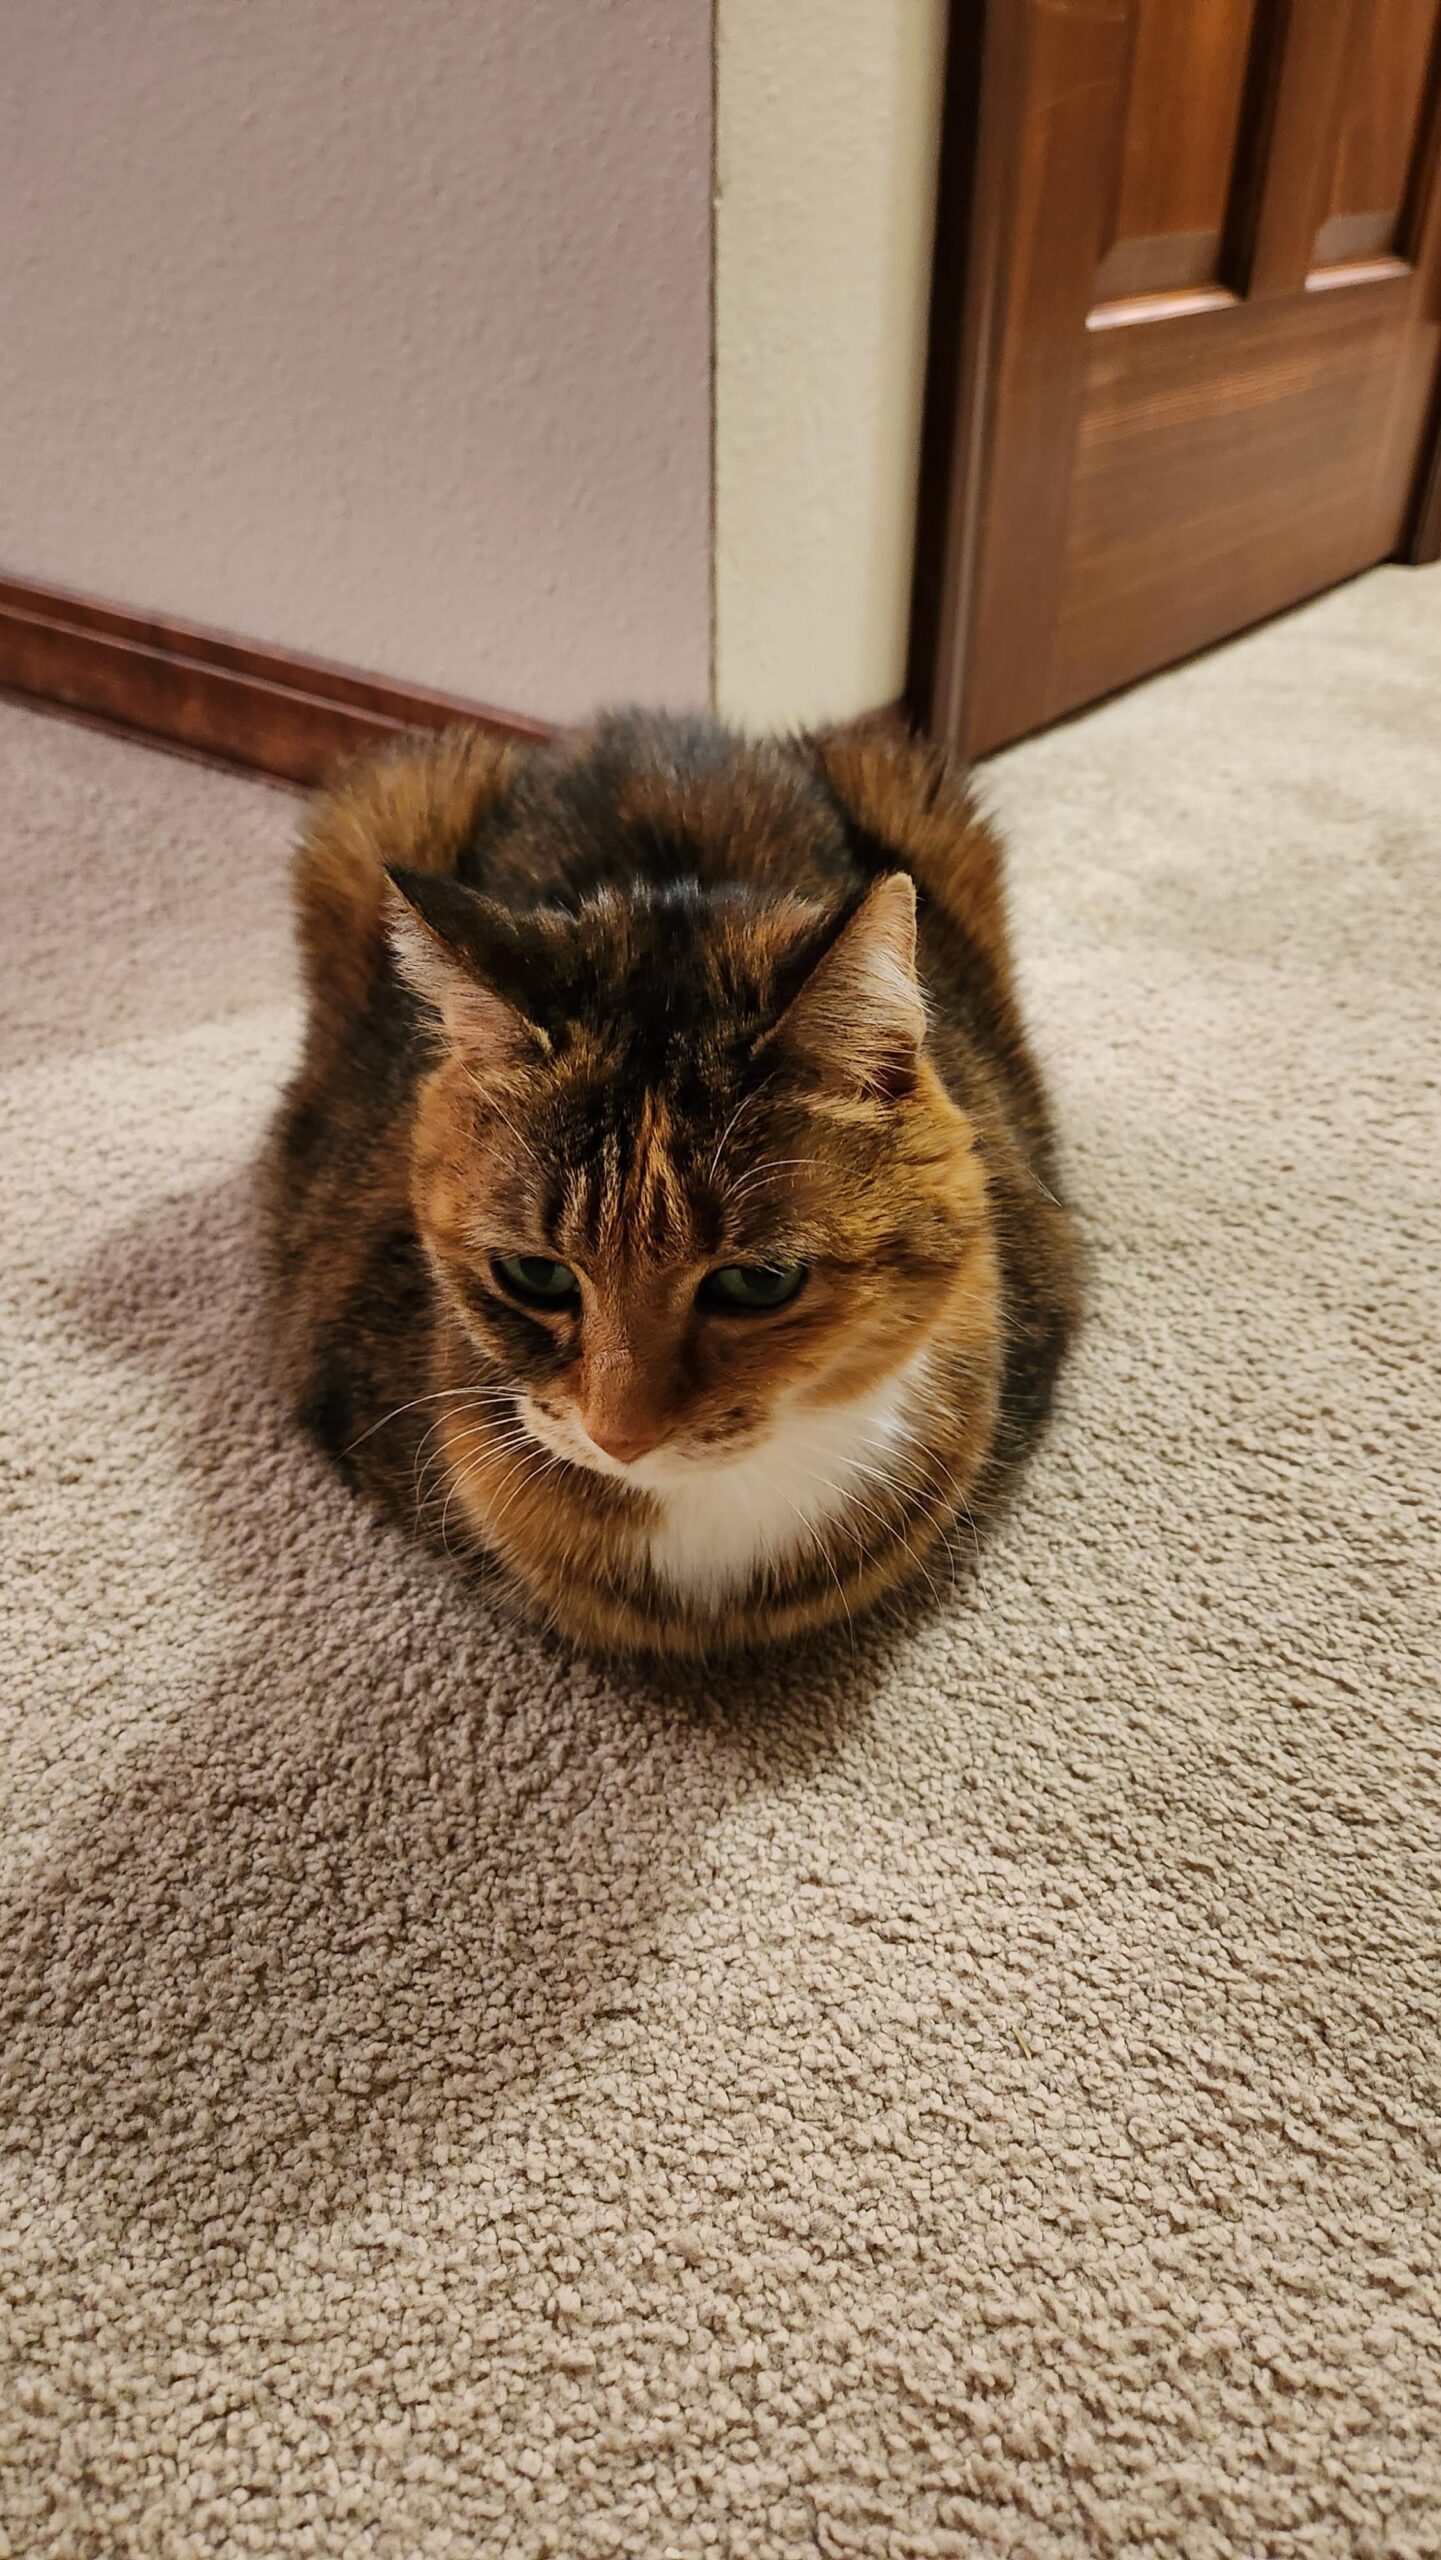 Quality loaf